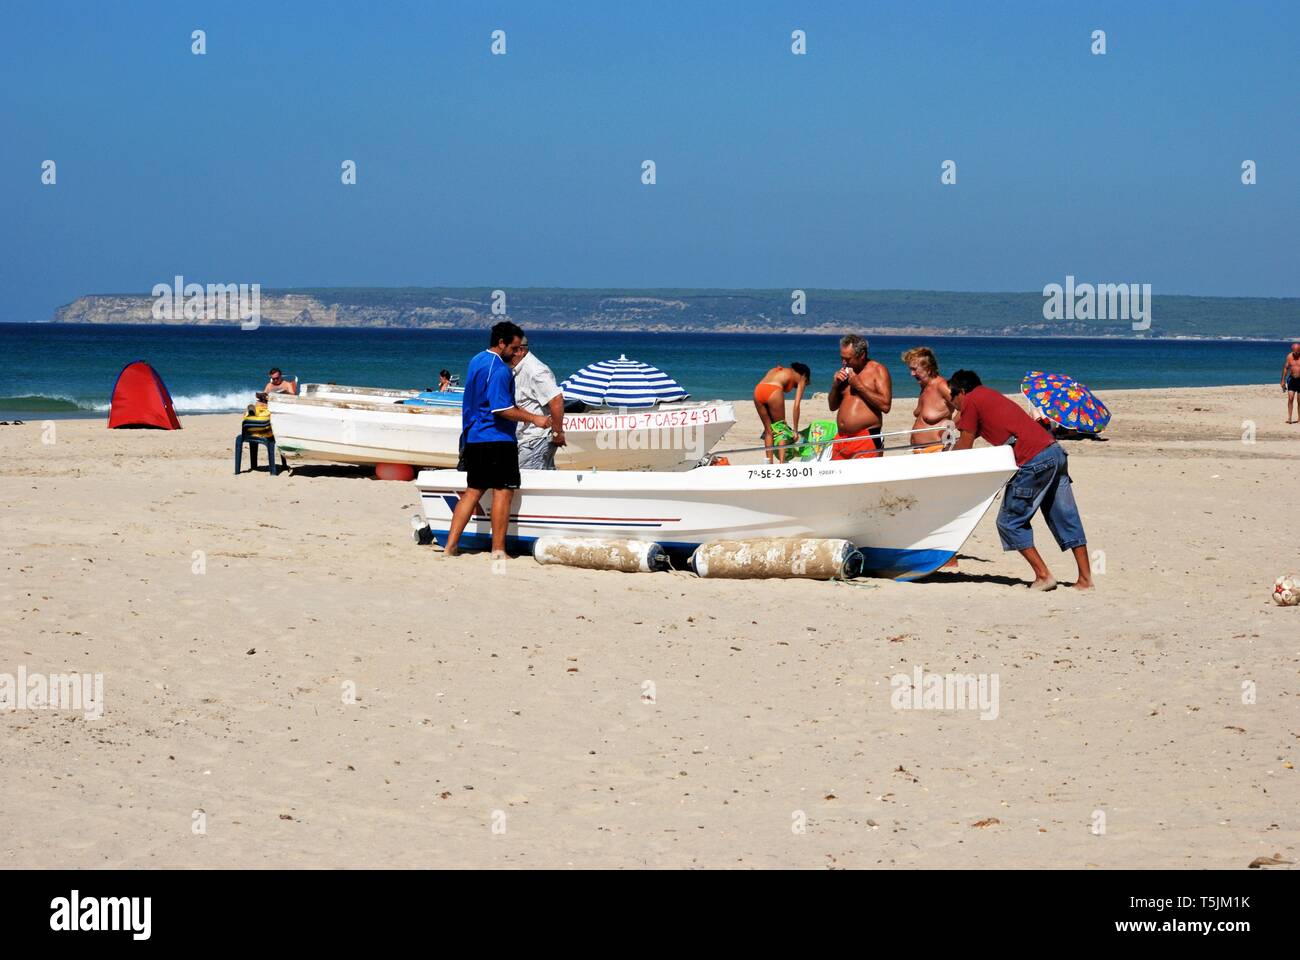 Wooden fishing boat on the beach with tourists enjoying the setting, Zahara de los Atunes, Cadiz Province, Spain. Stock Photo